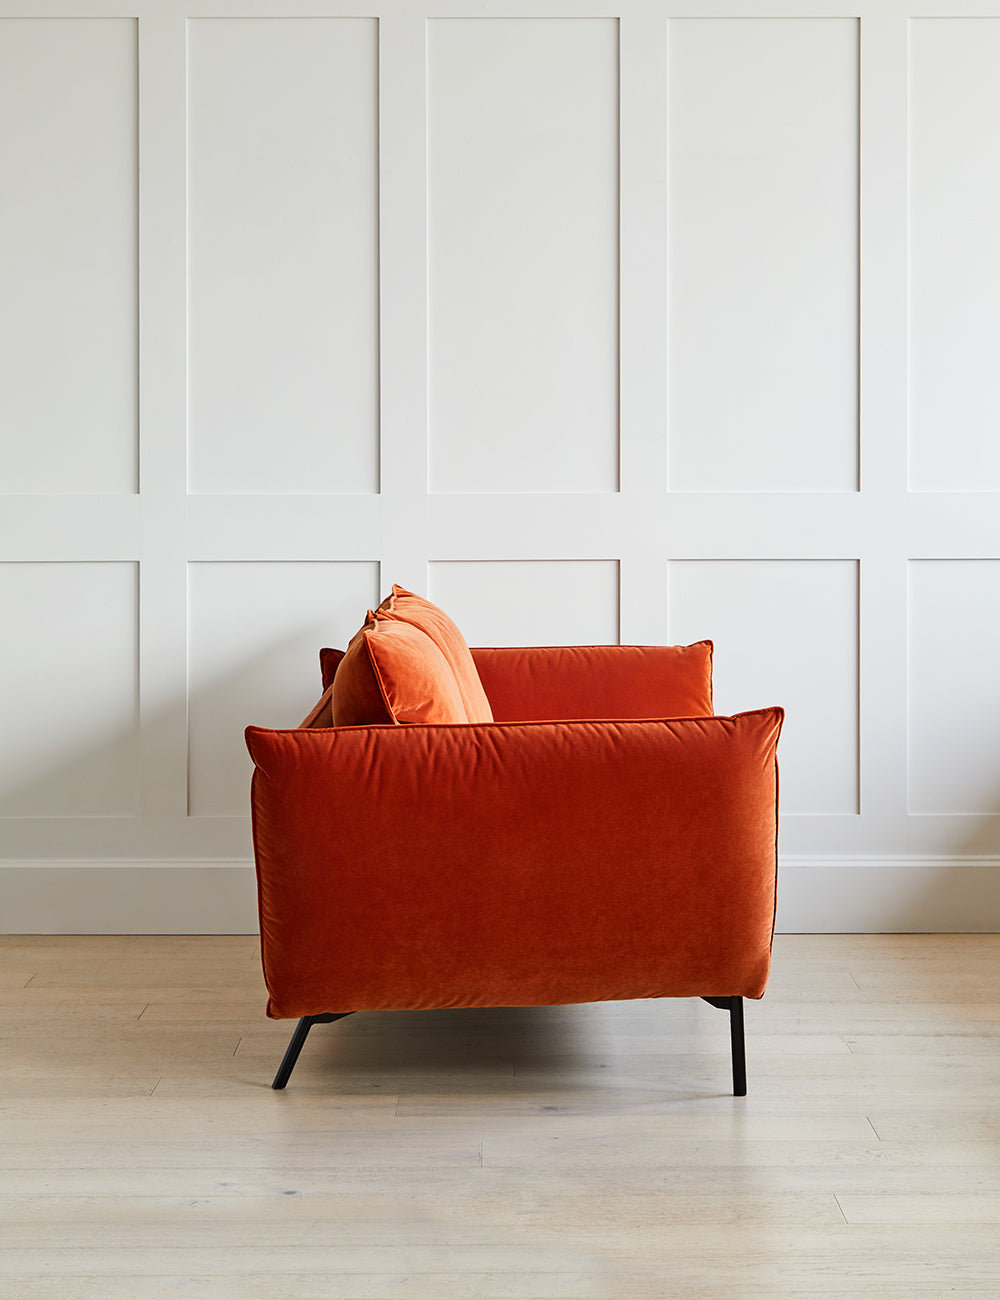 Didsbury Sofa 3 Seater in Classic Velvet Terracotta